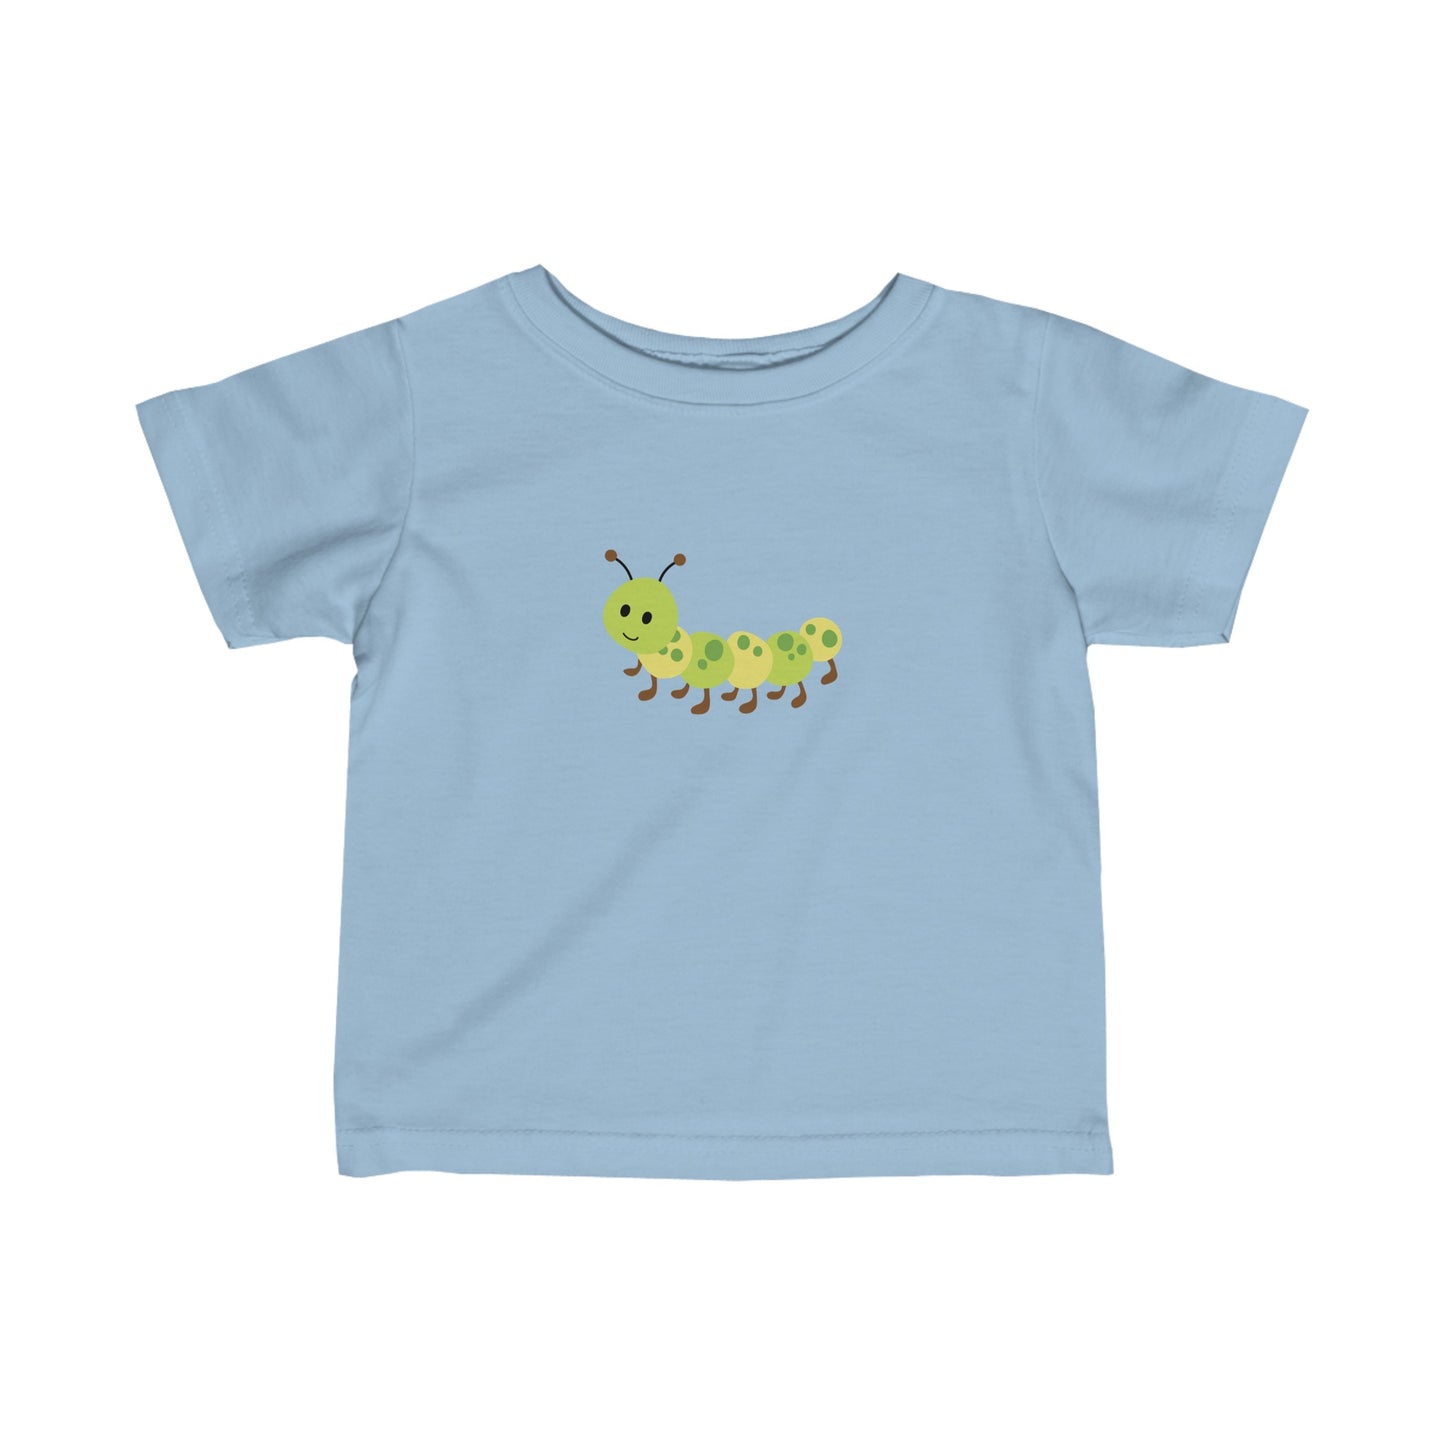 'Caterpillar' Infant Fine Jersey Tee with Caterpillar